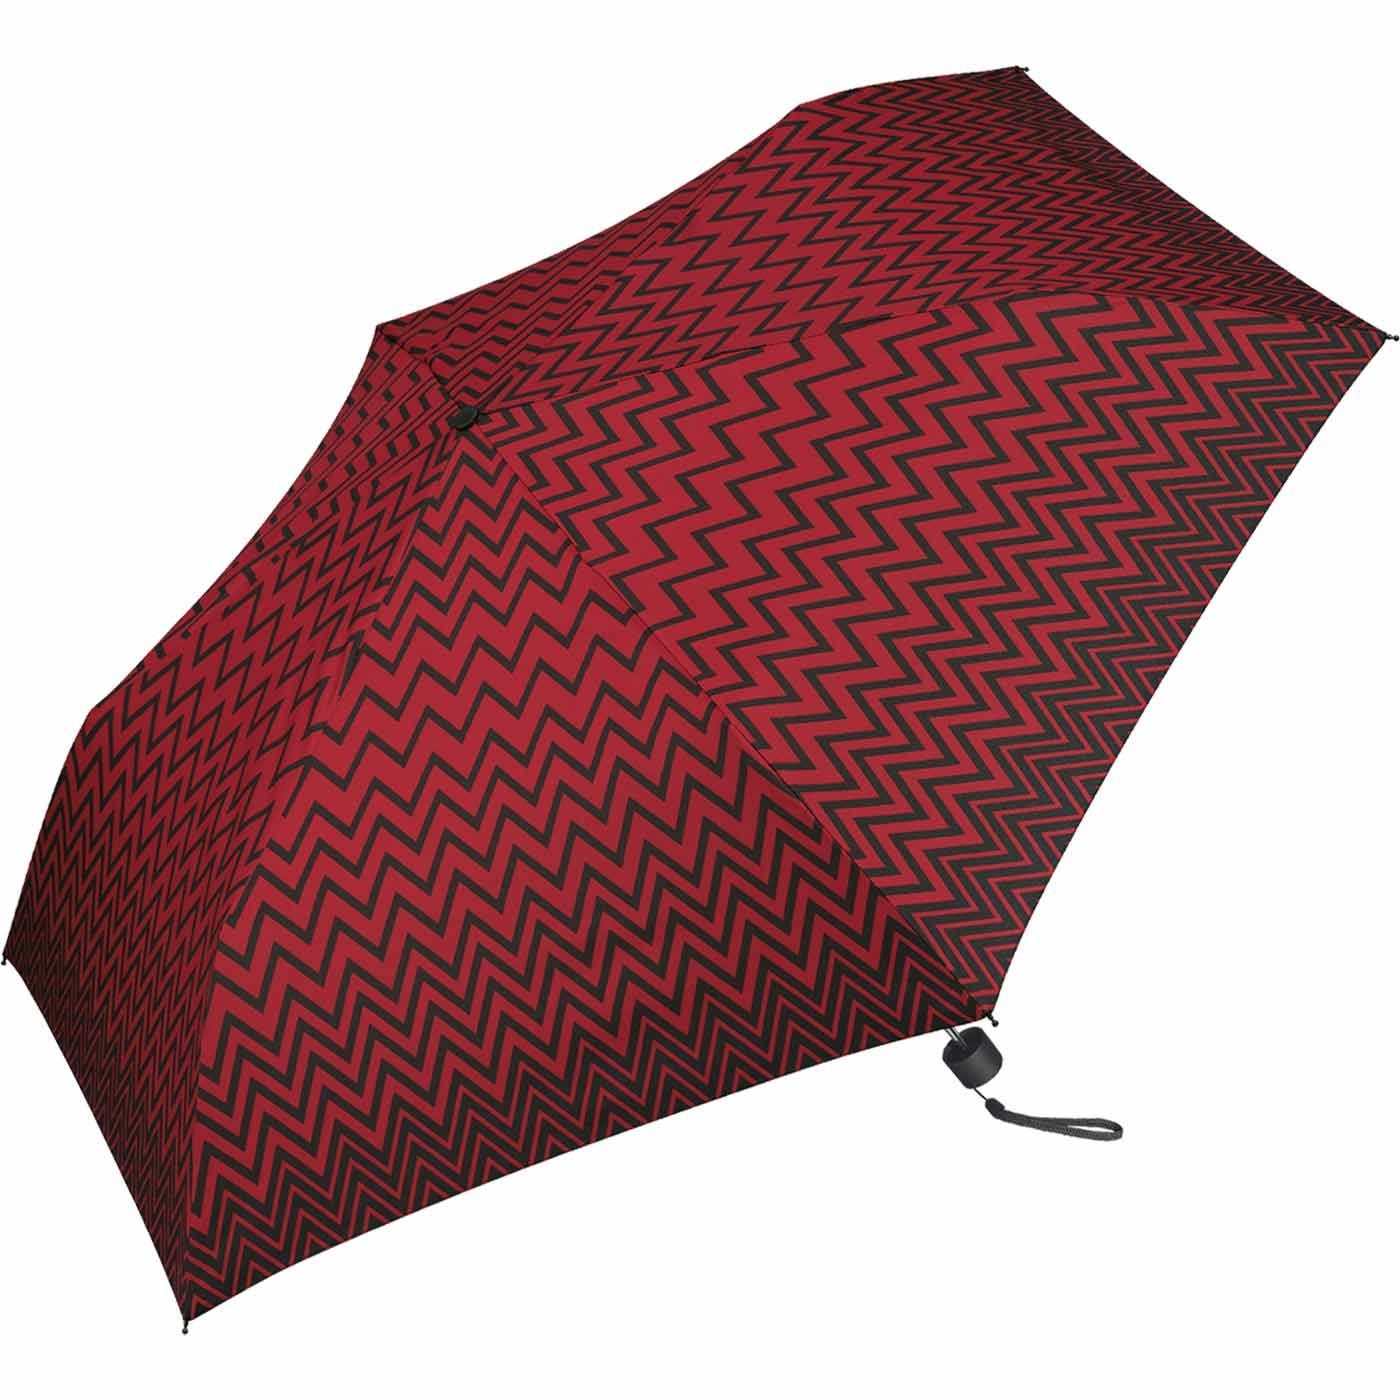 Pierre Cardin Langregenschirm mit Handöffner, geometrischen interessantem mit schlanker Damen-Taschenschirm Zickzack-Muster